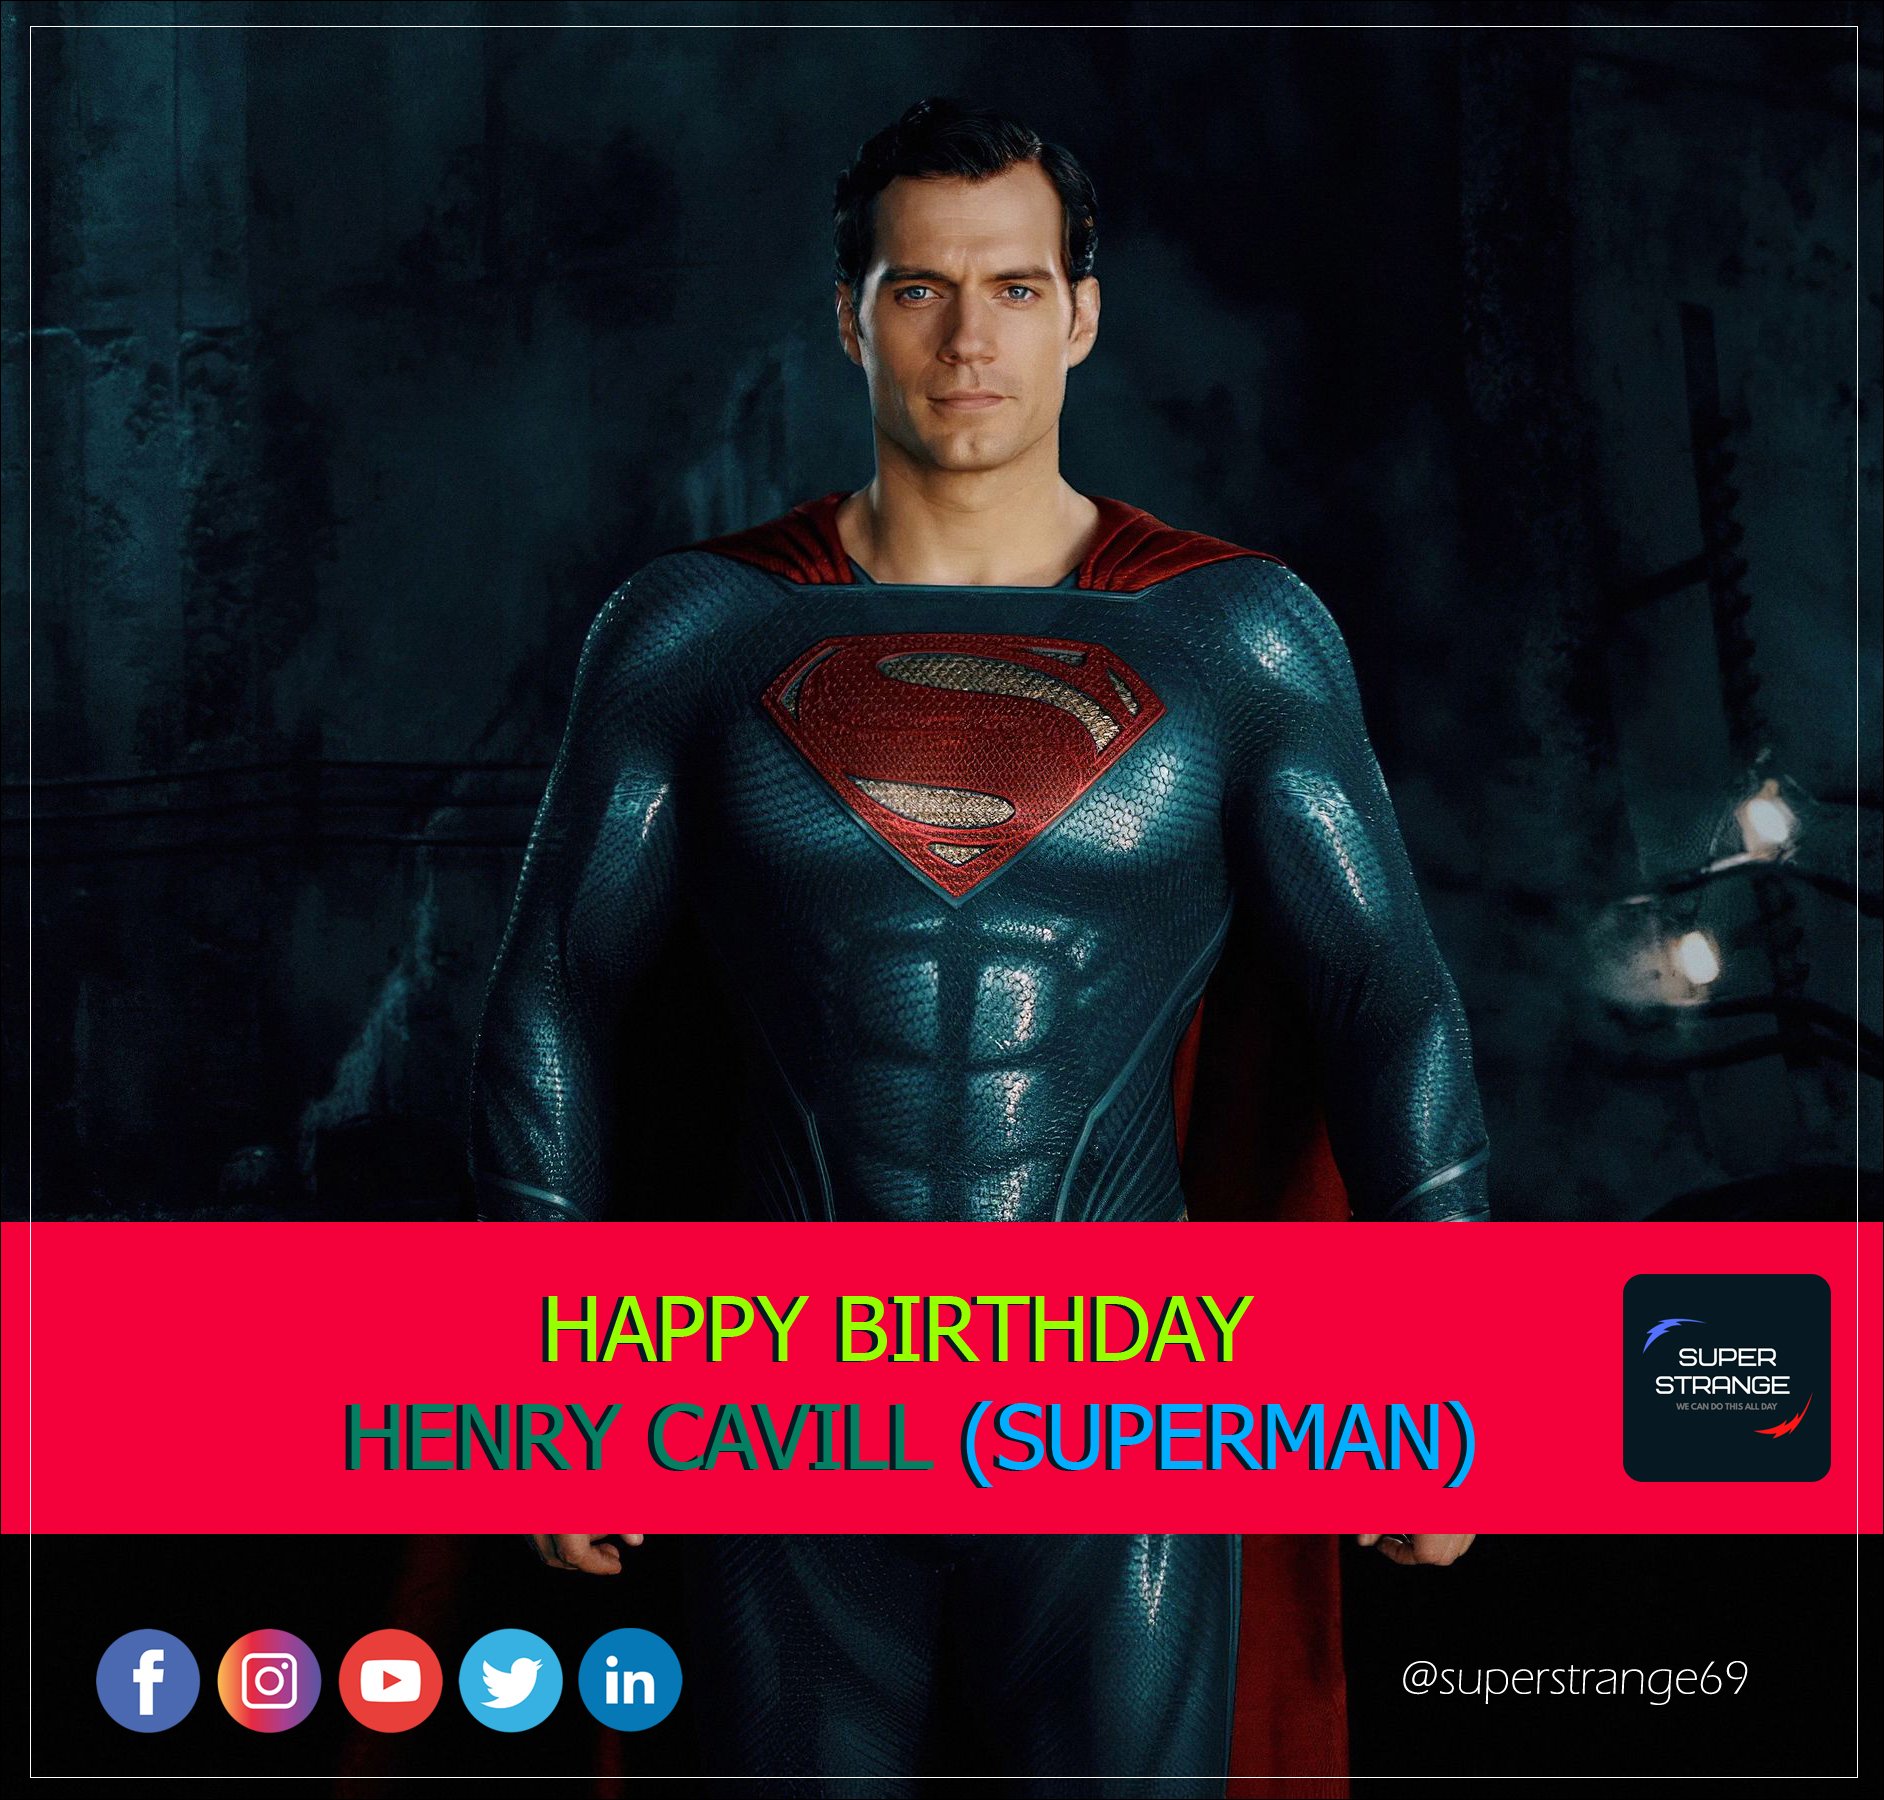 Happy Birthday Henry Cavill - The Best Superman Ever  Many Many Happy Returns Of The Day  